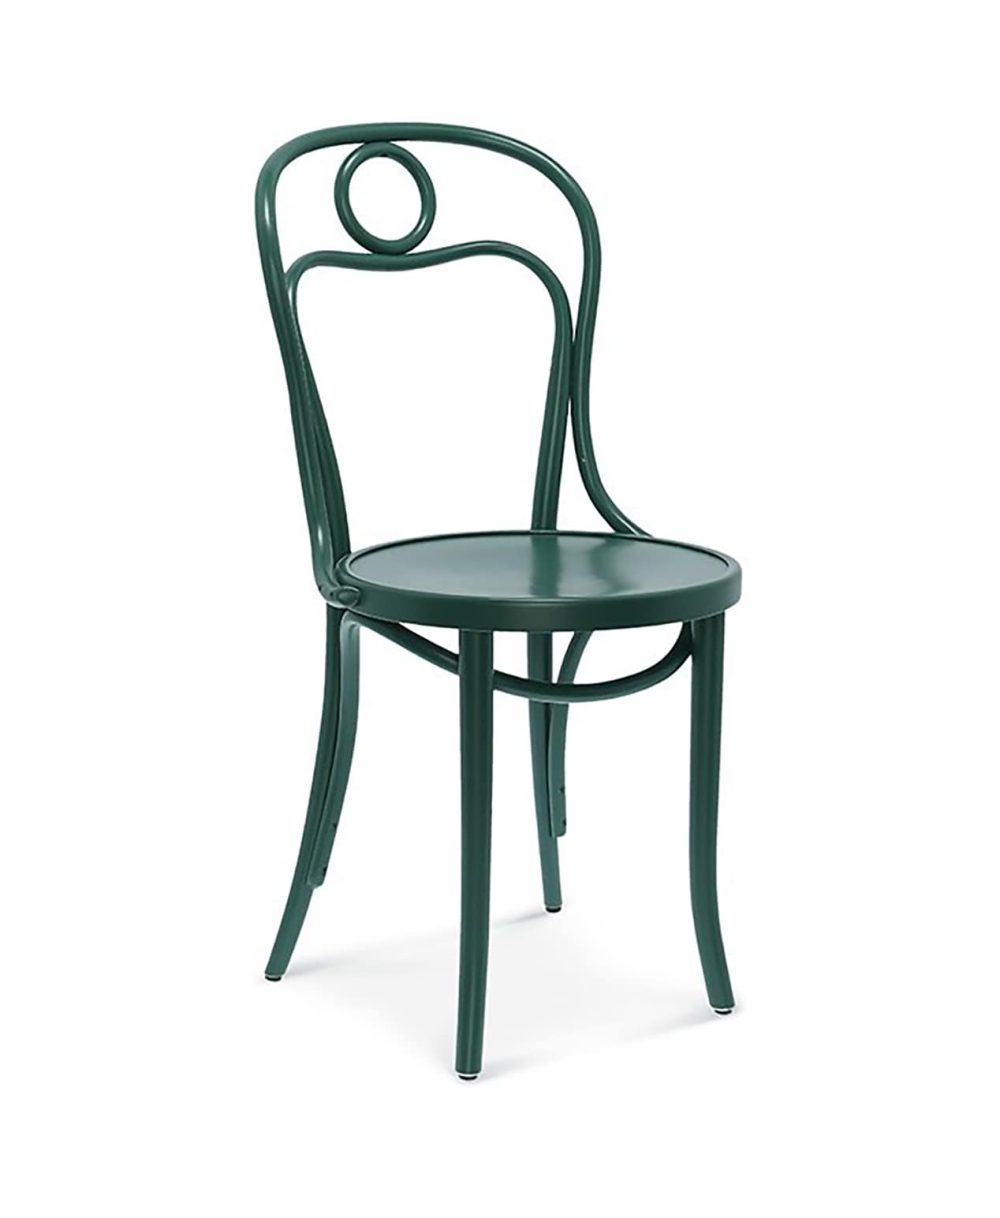 no31-chair-profile.jpg